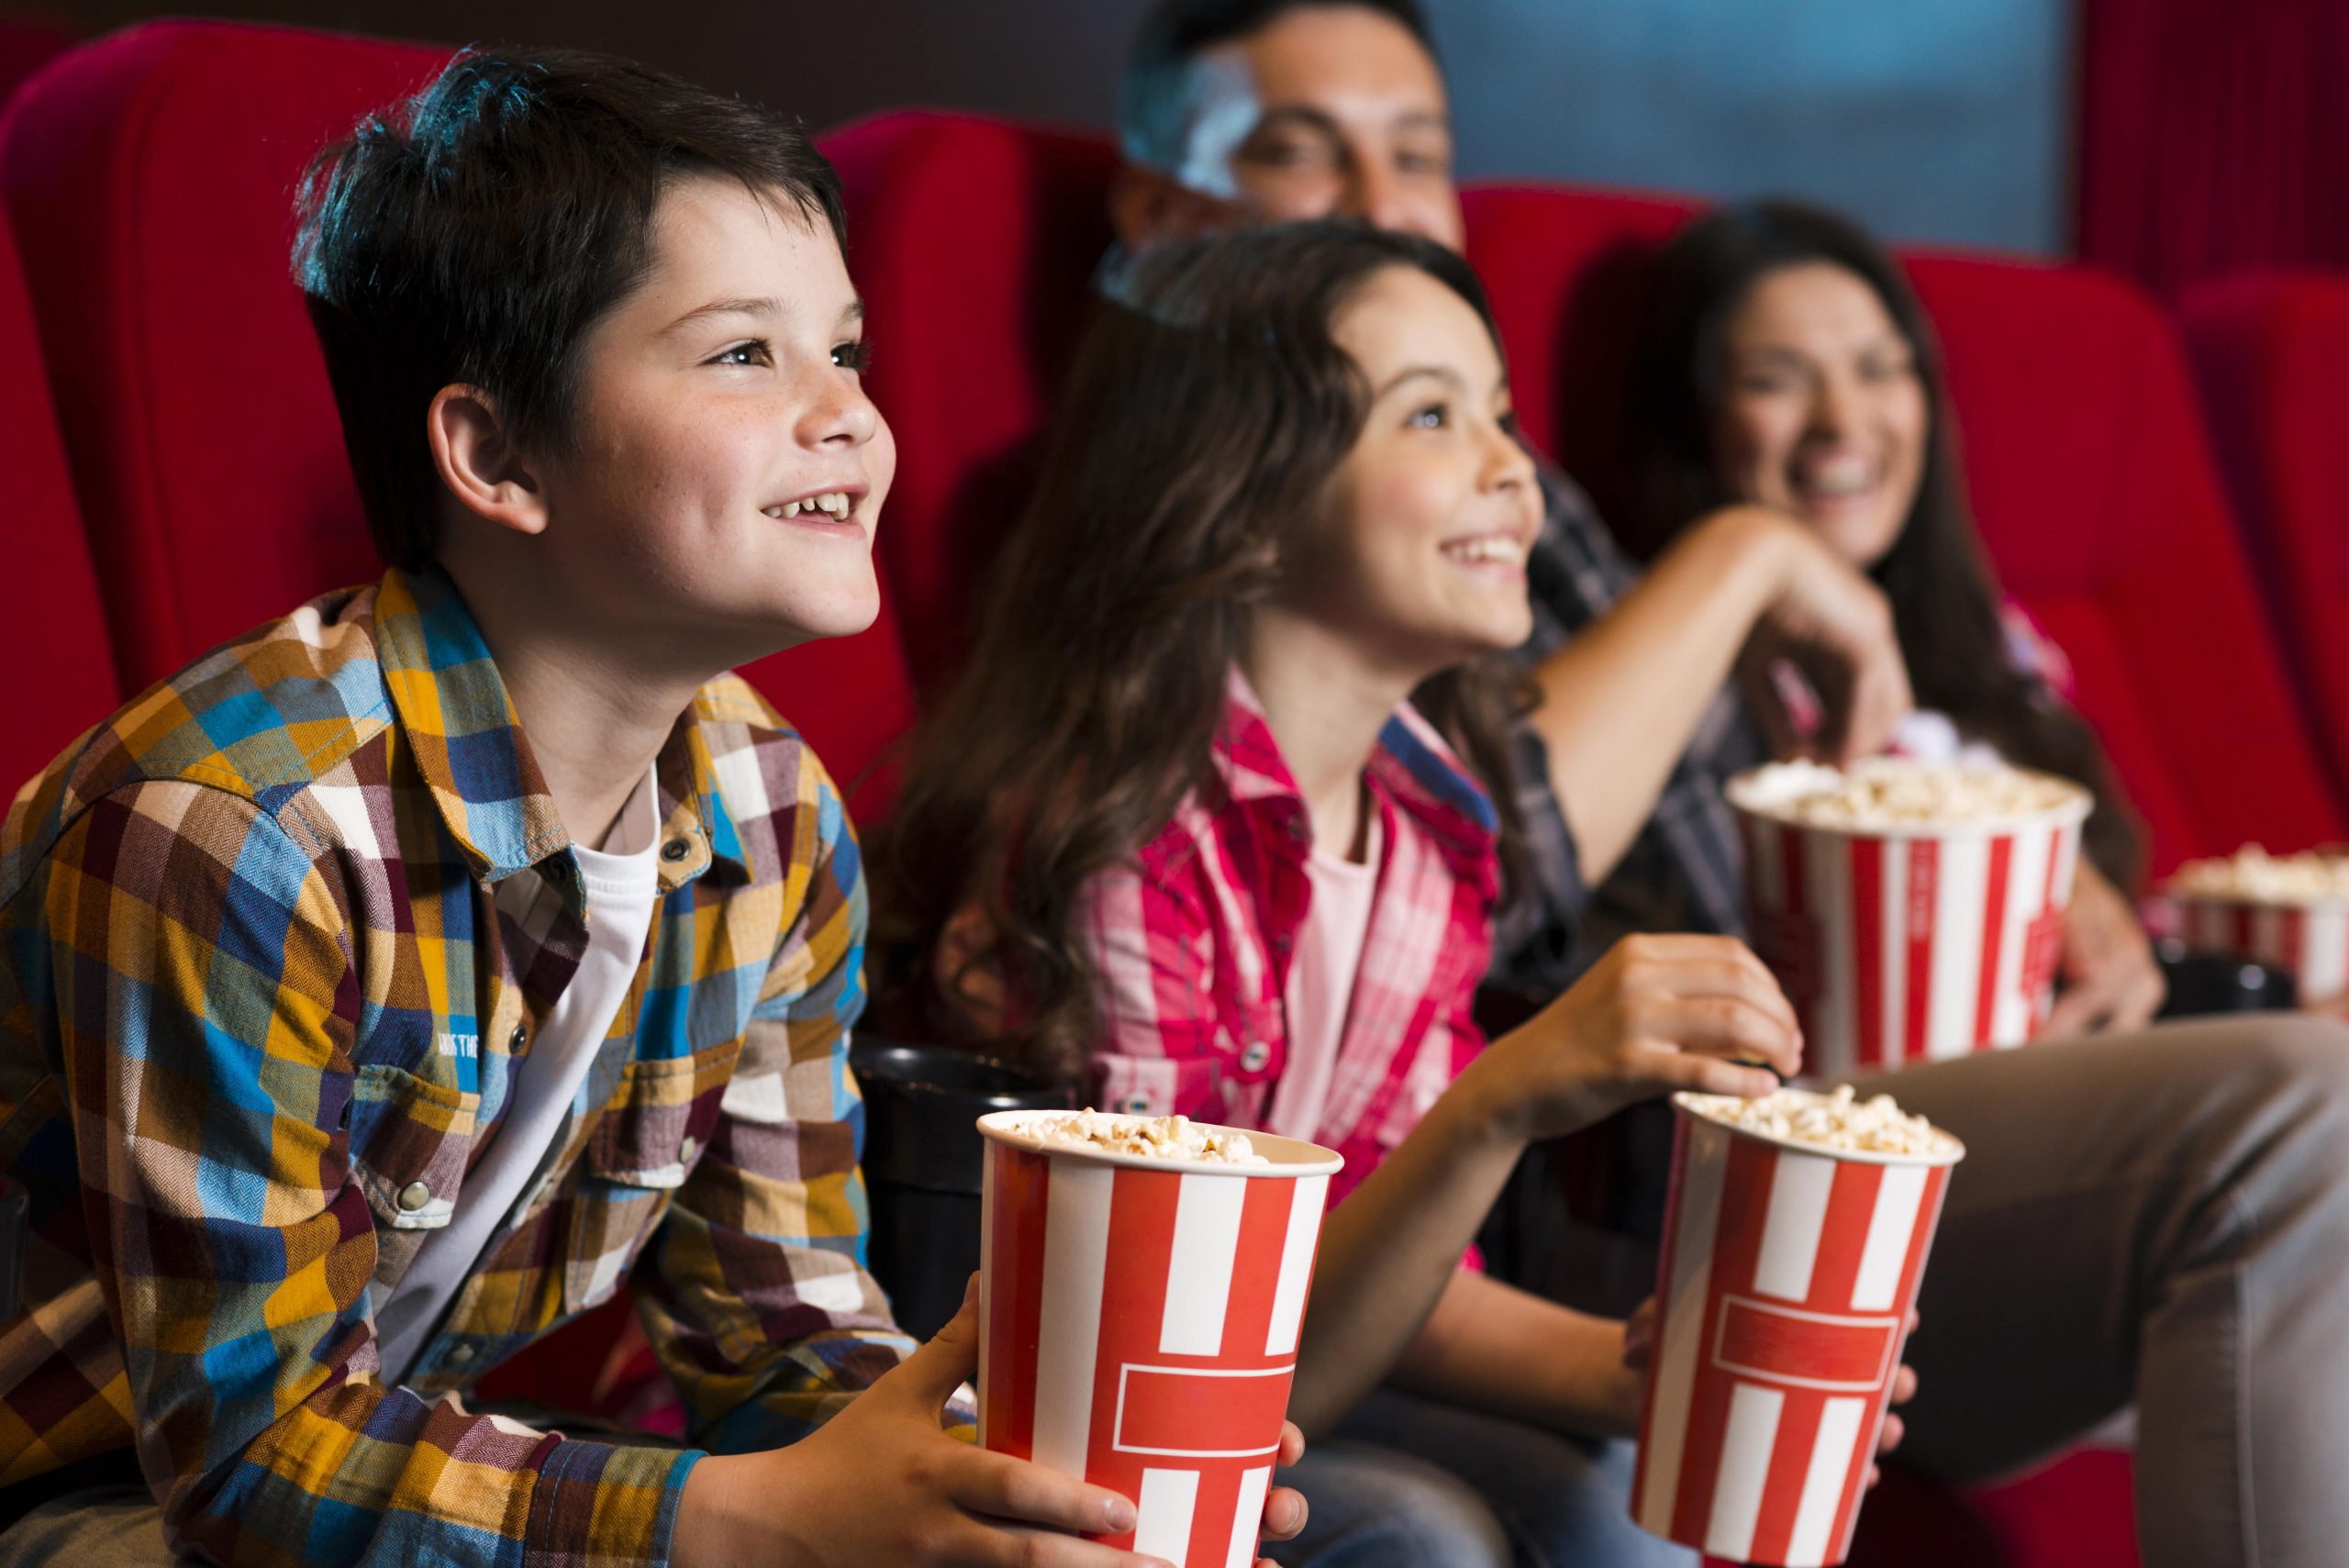 The cinema is than the library. Дети в кинотеатре. Поход в кинотеатр. Дети в кинотеатре с попкорном. Подростки в кинотеатре с попкорном.